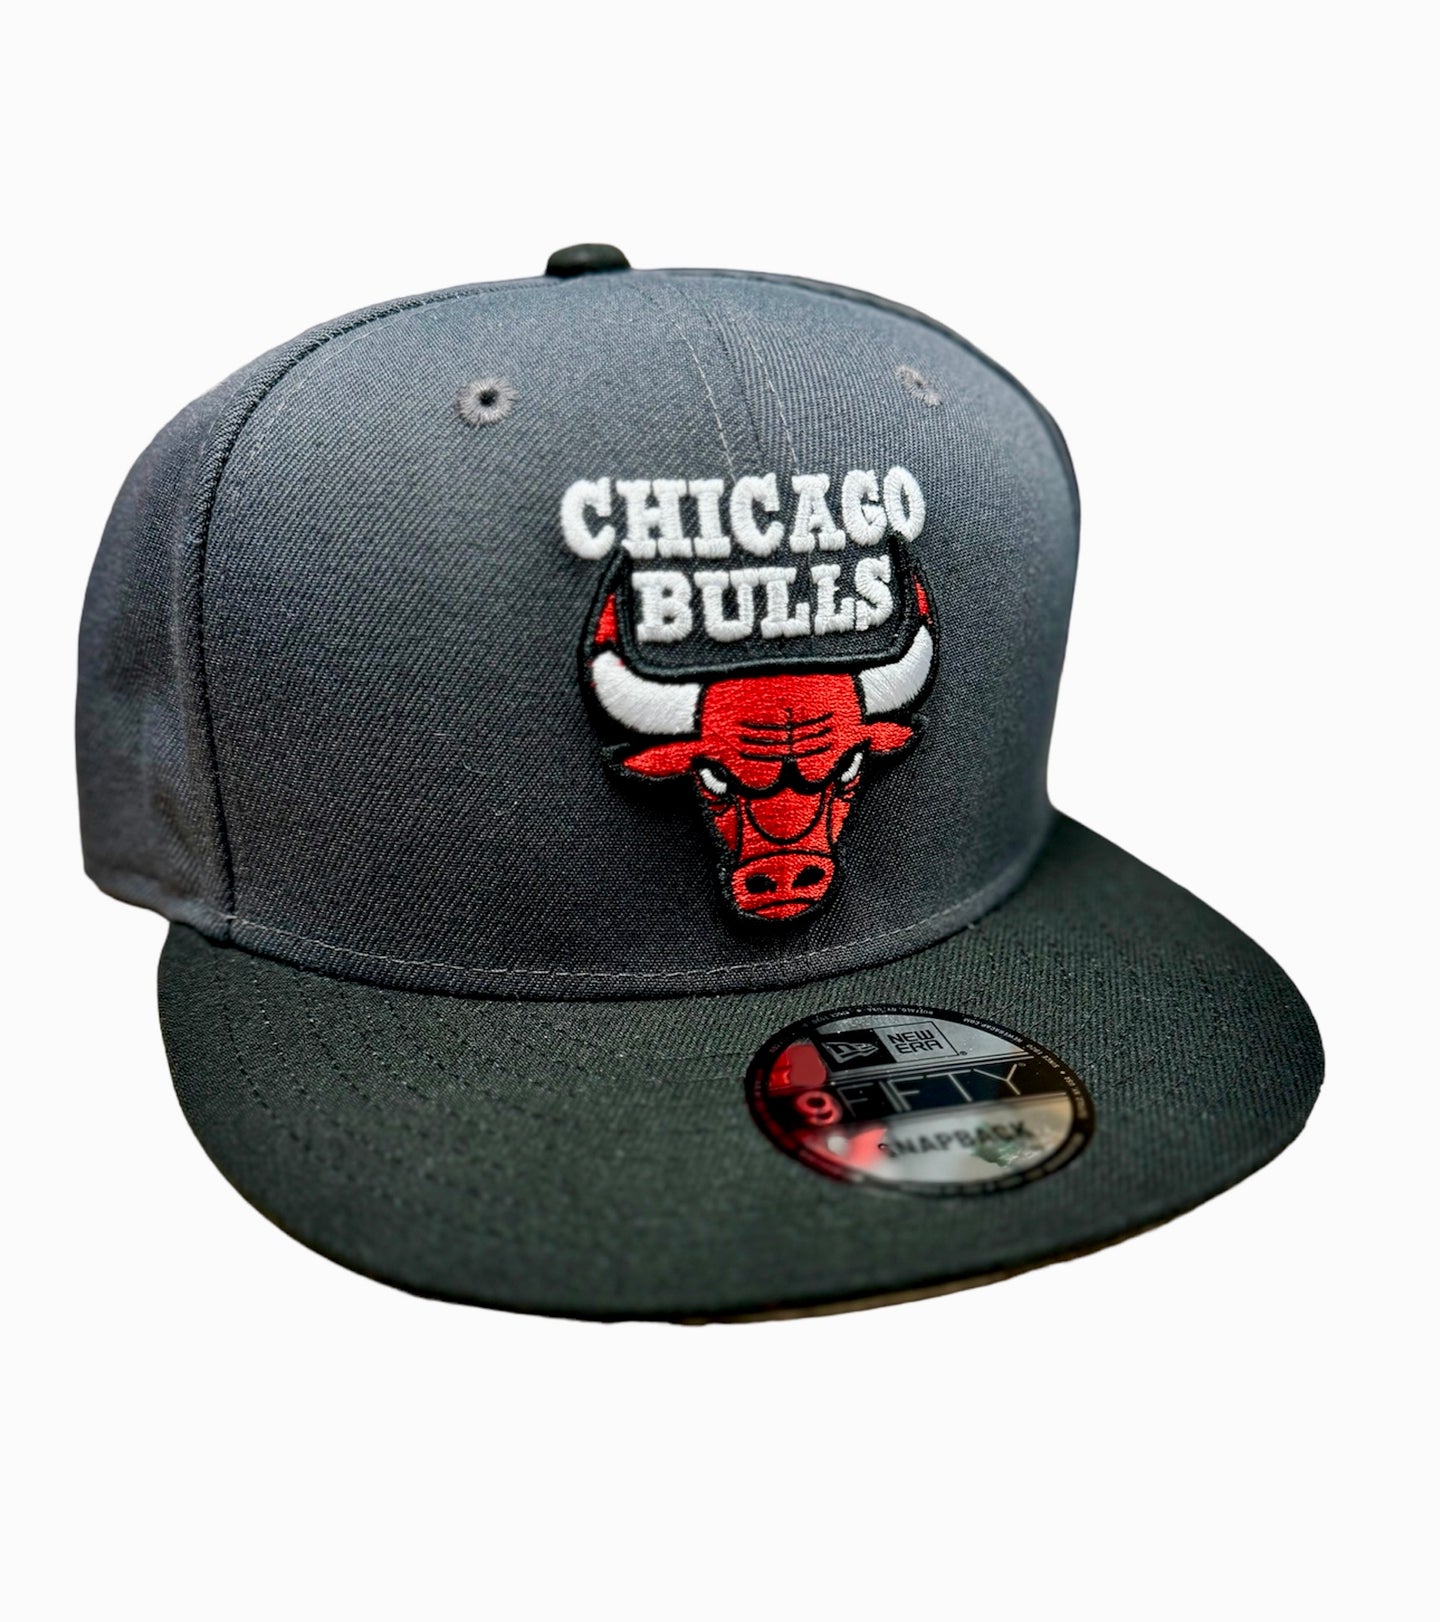 Chicago Bulls New Era 950 9Fifty Charcoal Grey & Black with Red Bulls Logo Snapback